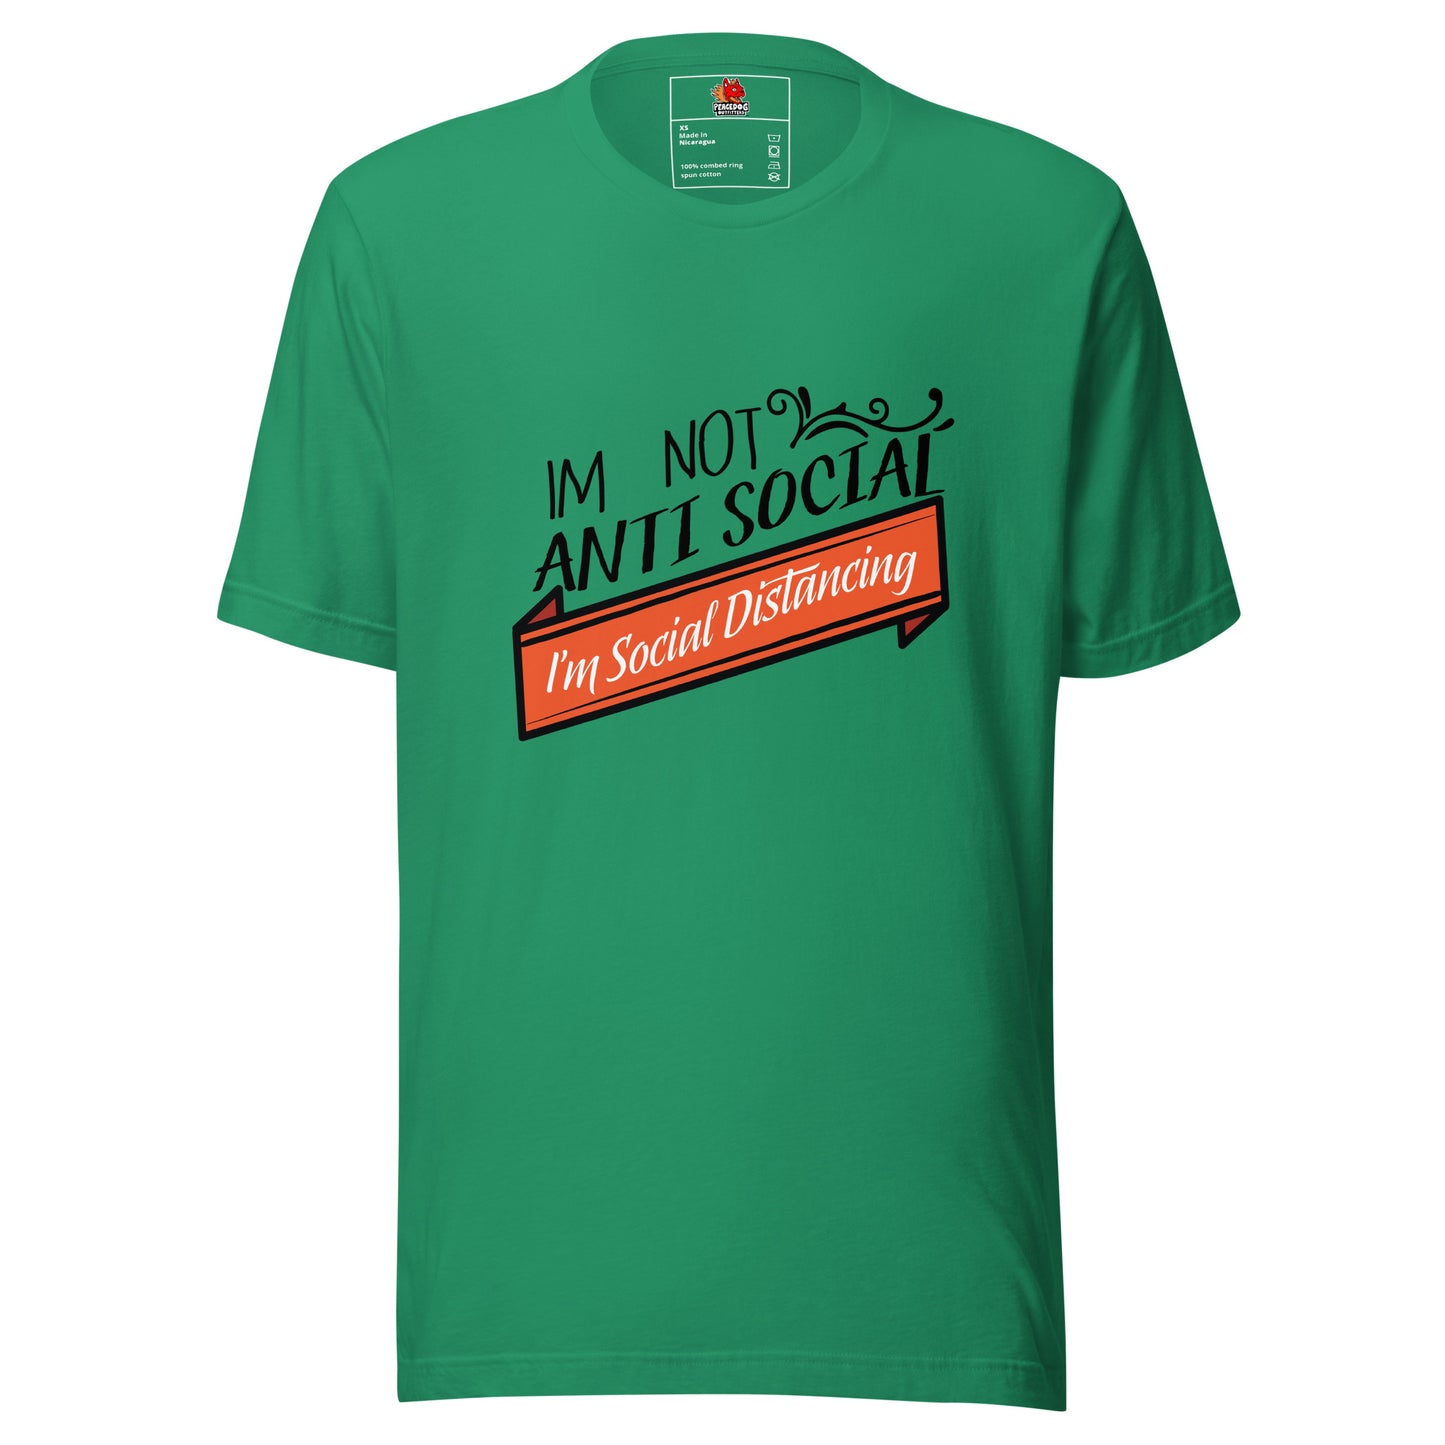 I'm Not Anti-Social, I'm Social Distancing T-shirt